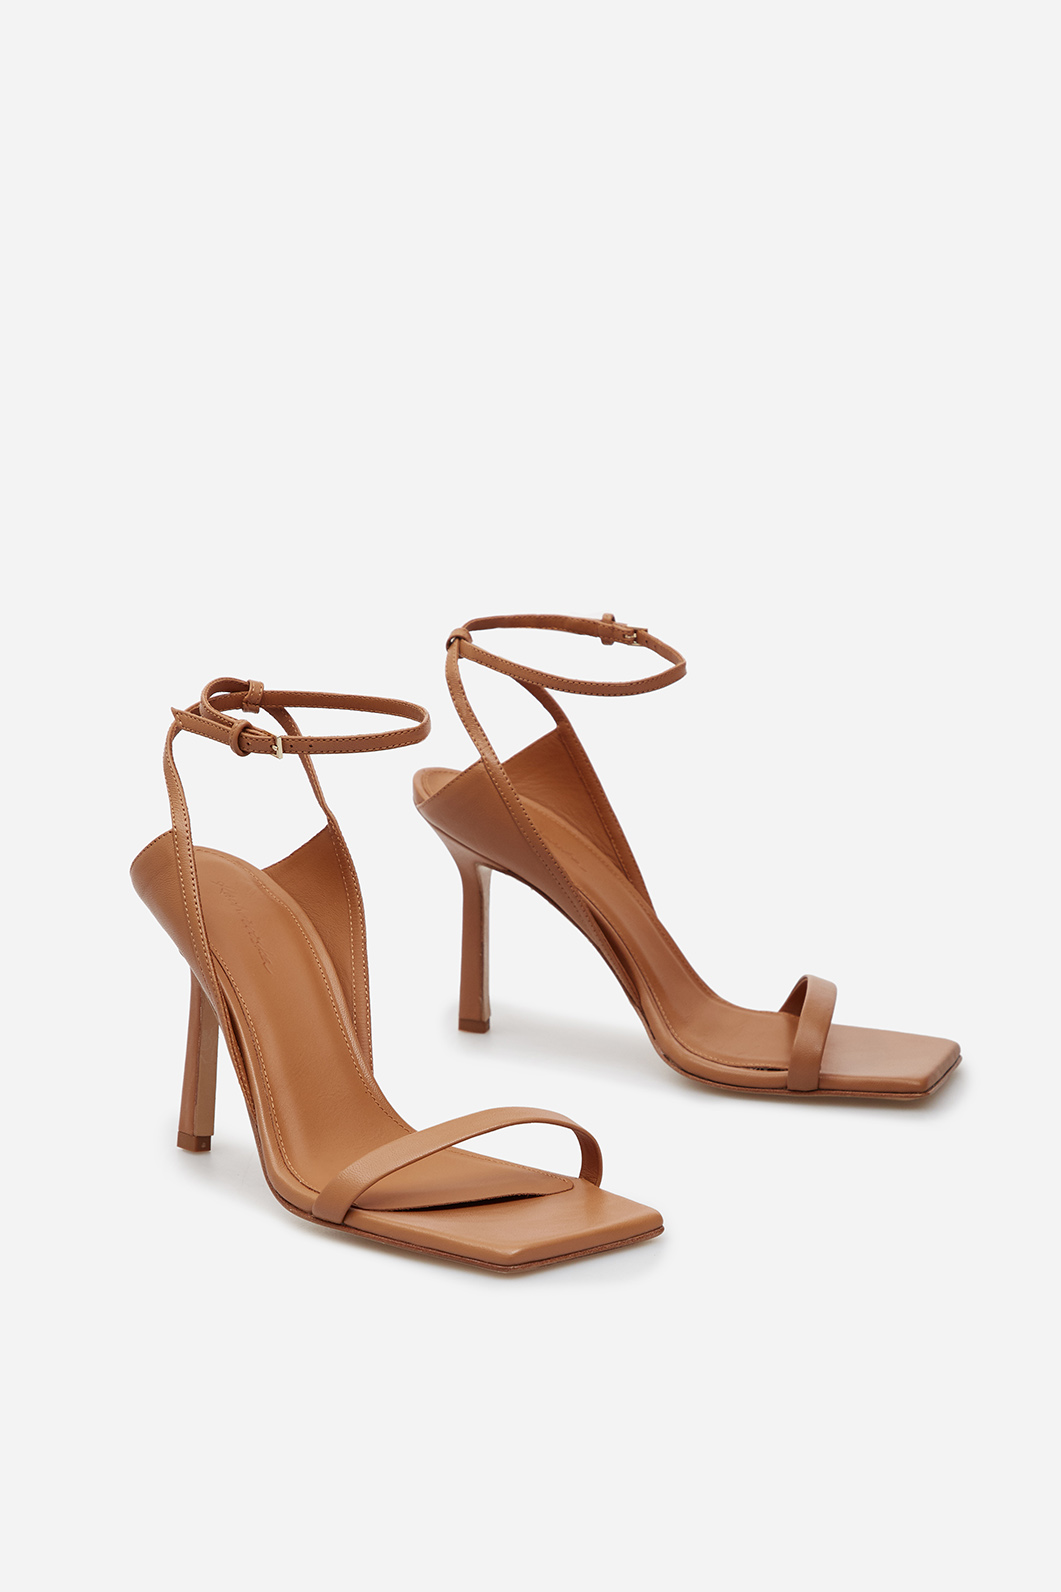 Bony brown leather
sandals /9 cm/